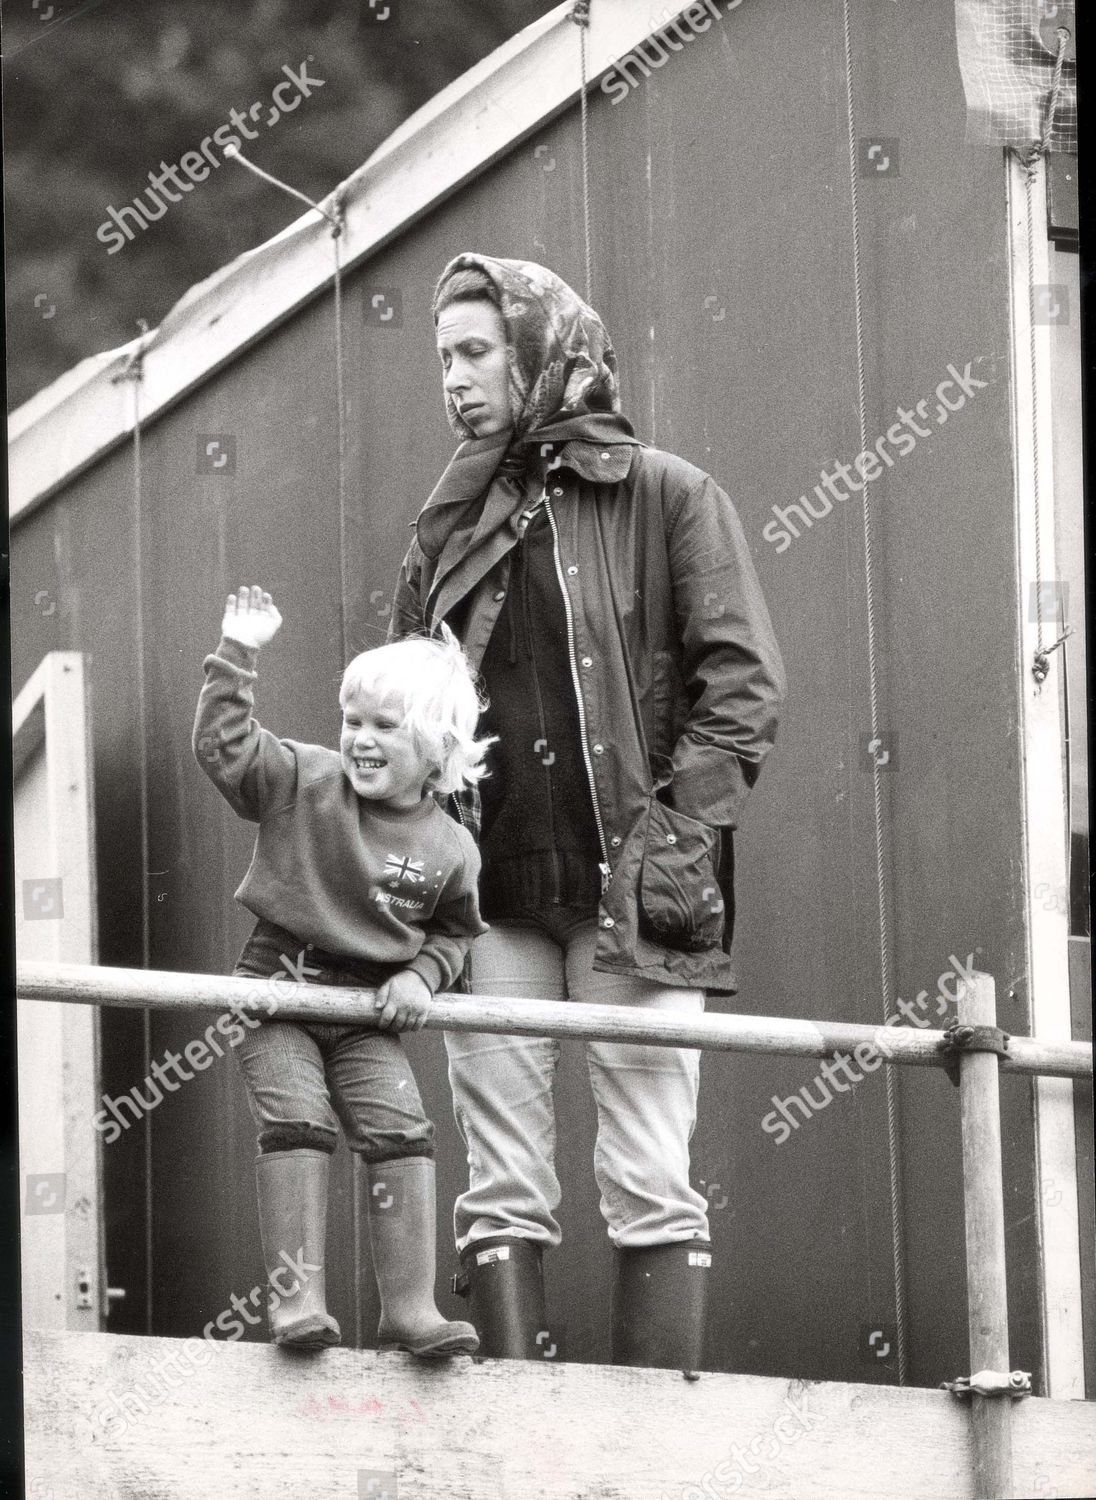 zara-phillips-25th-september-1984-hrh-princess-anne-at-gatcombe-park-with-daughter-zara-phillips-royalty-shutterstock-editorial-930311a.jpg